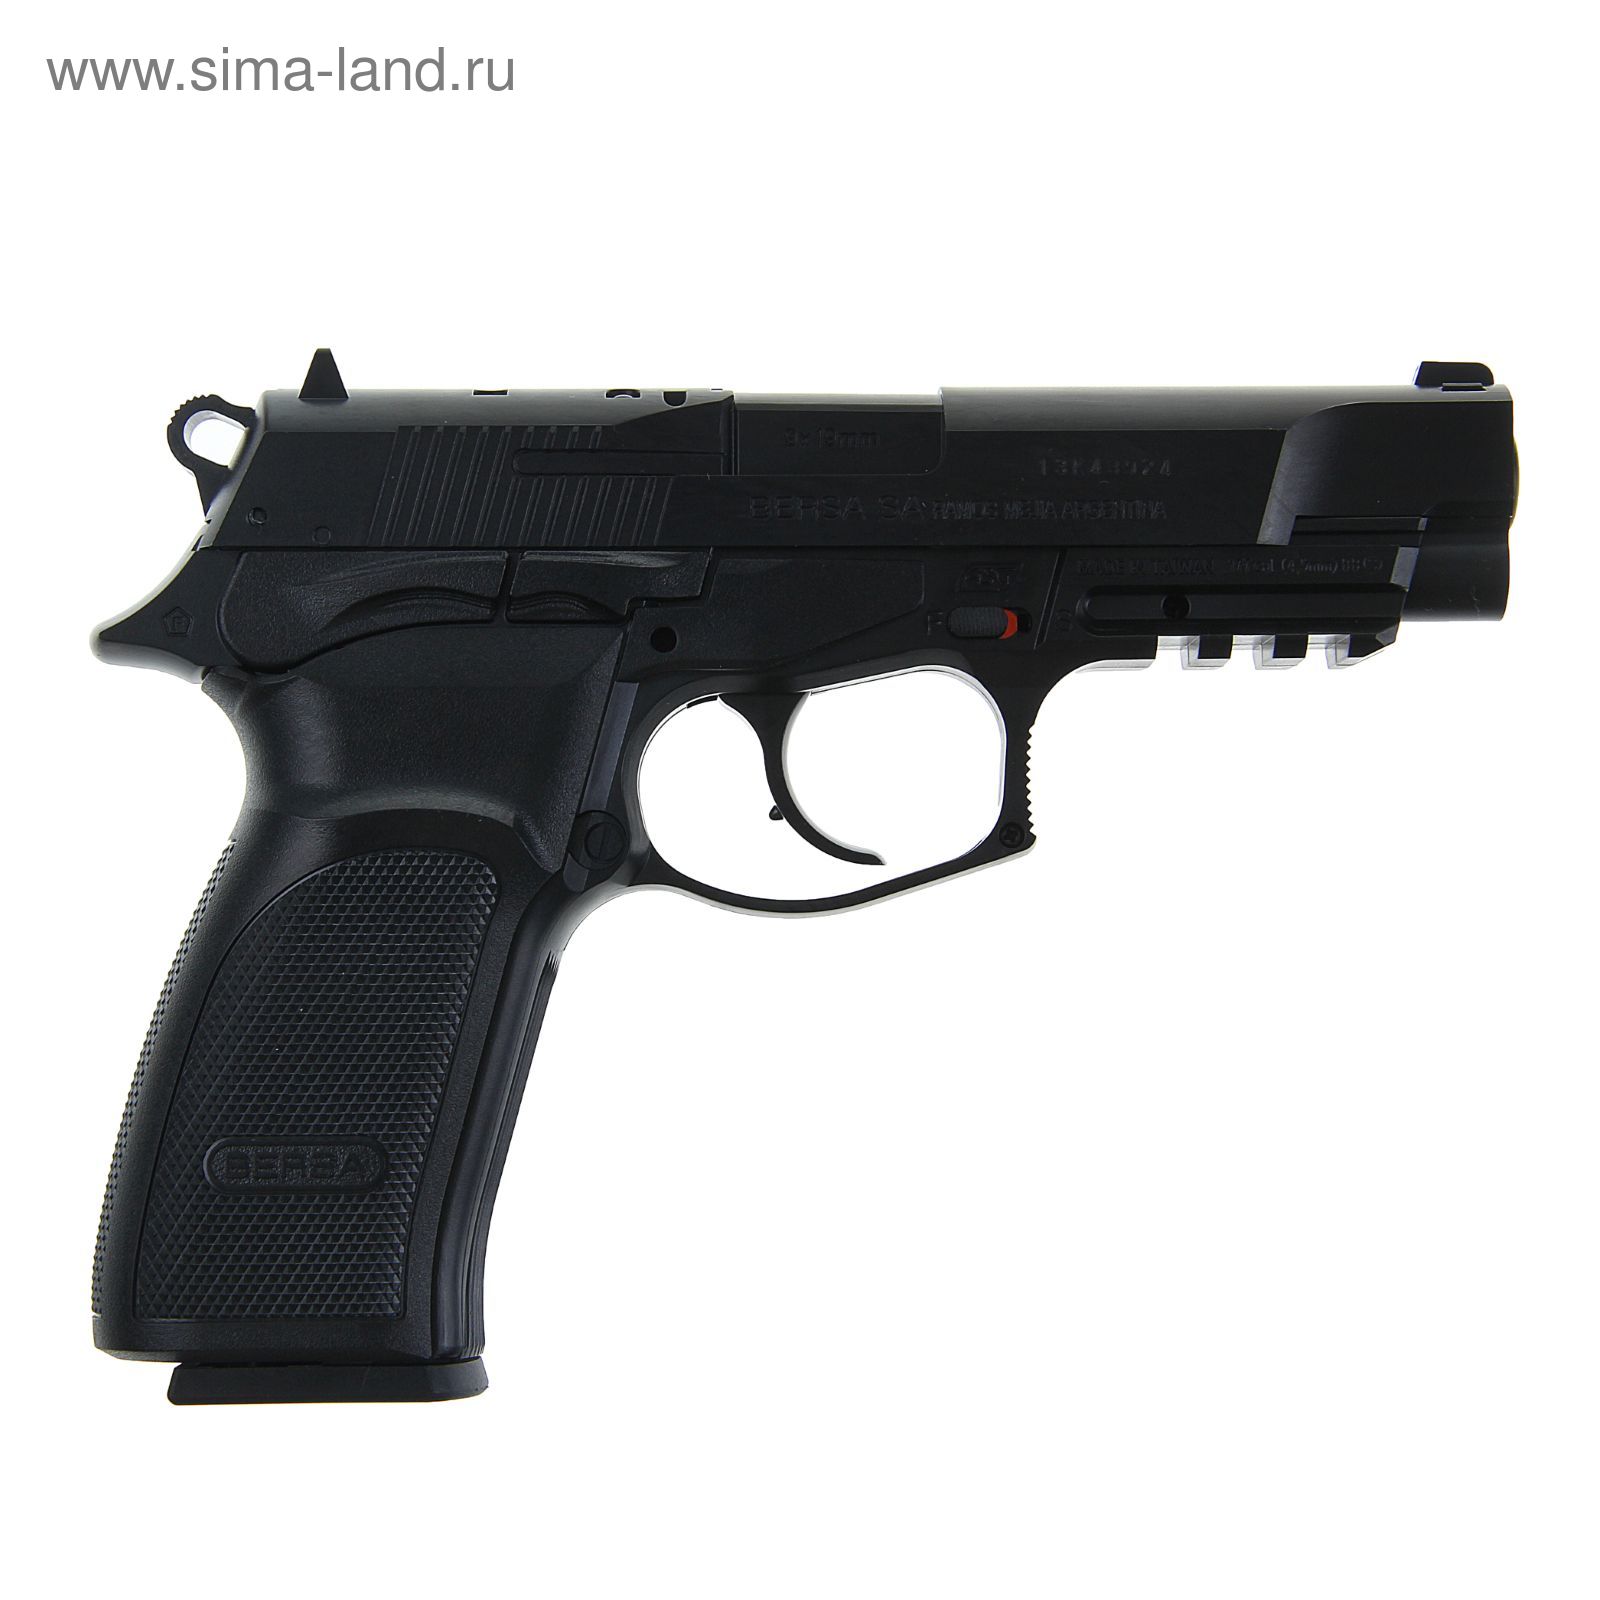 Пистолет пневматический BERSA THUNDER 9 PRO (17302) кал. 4,5 мм